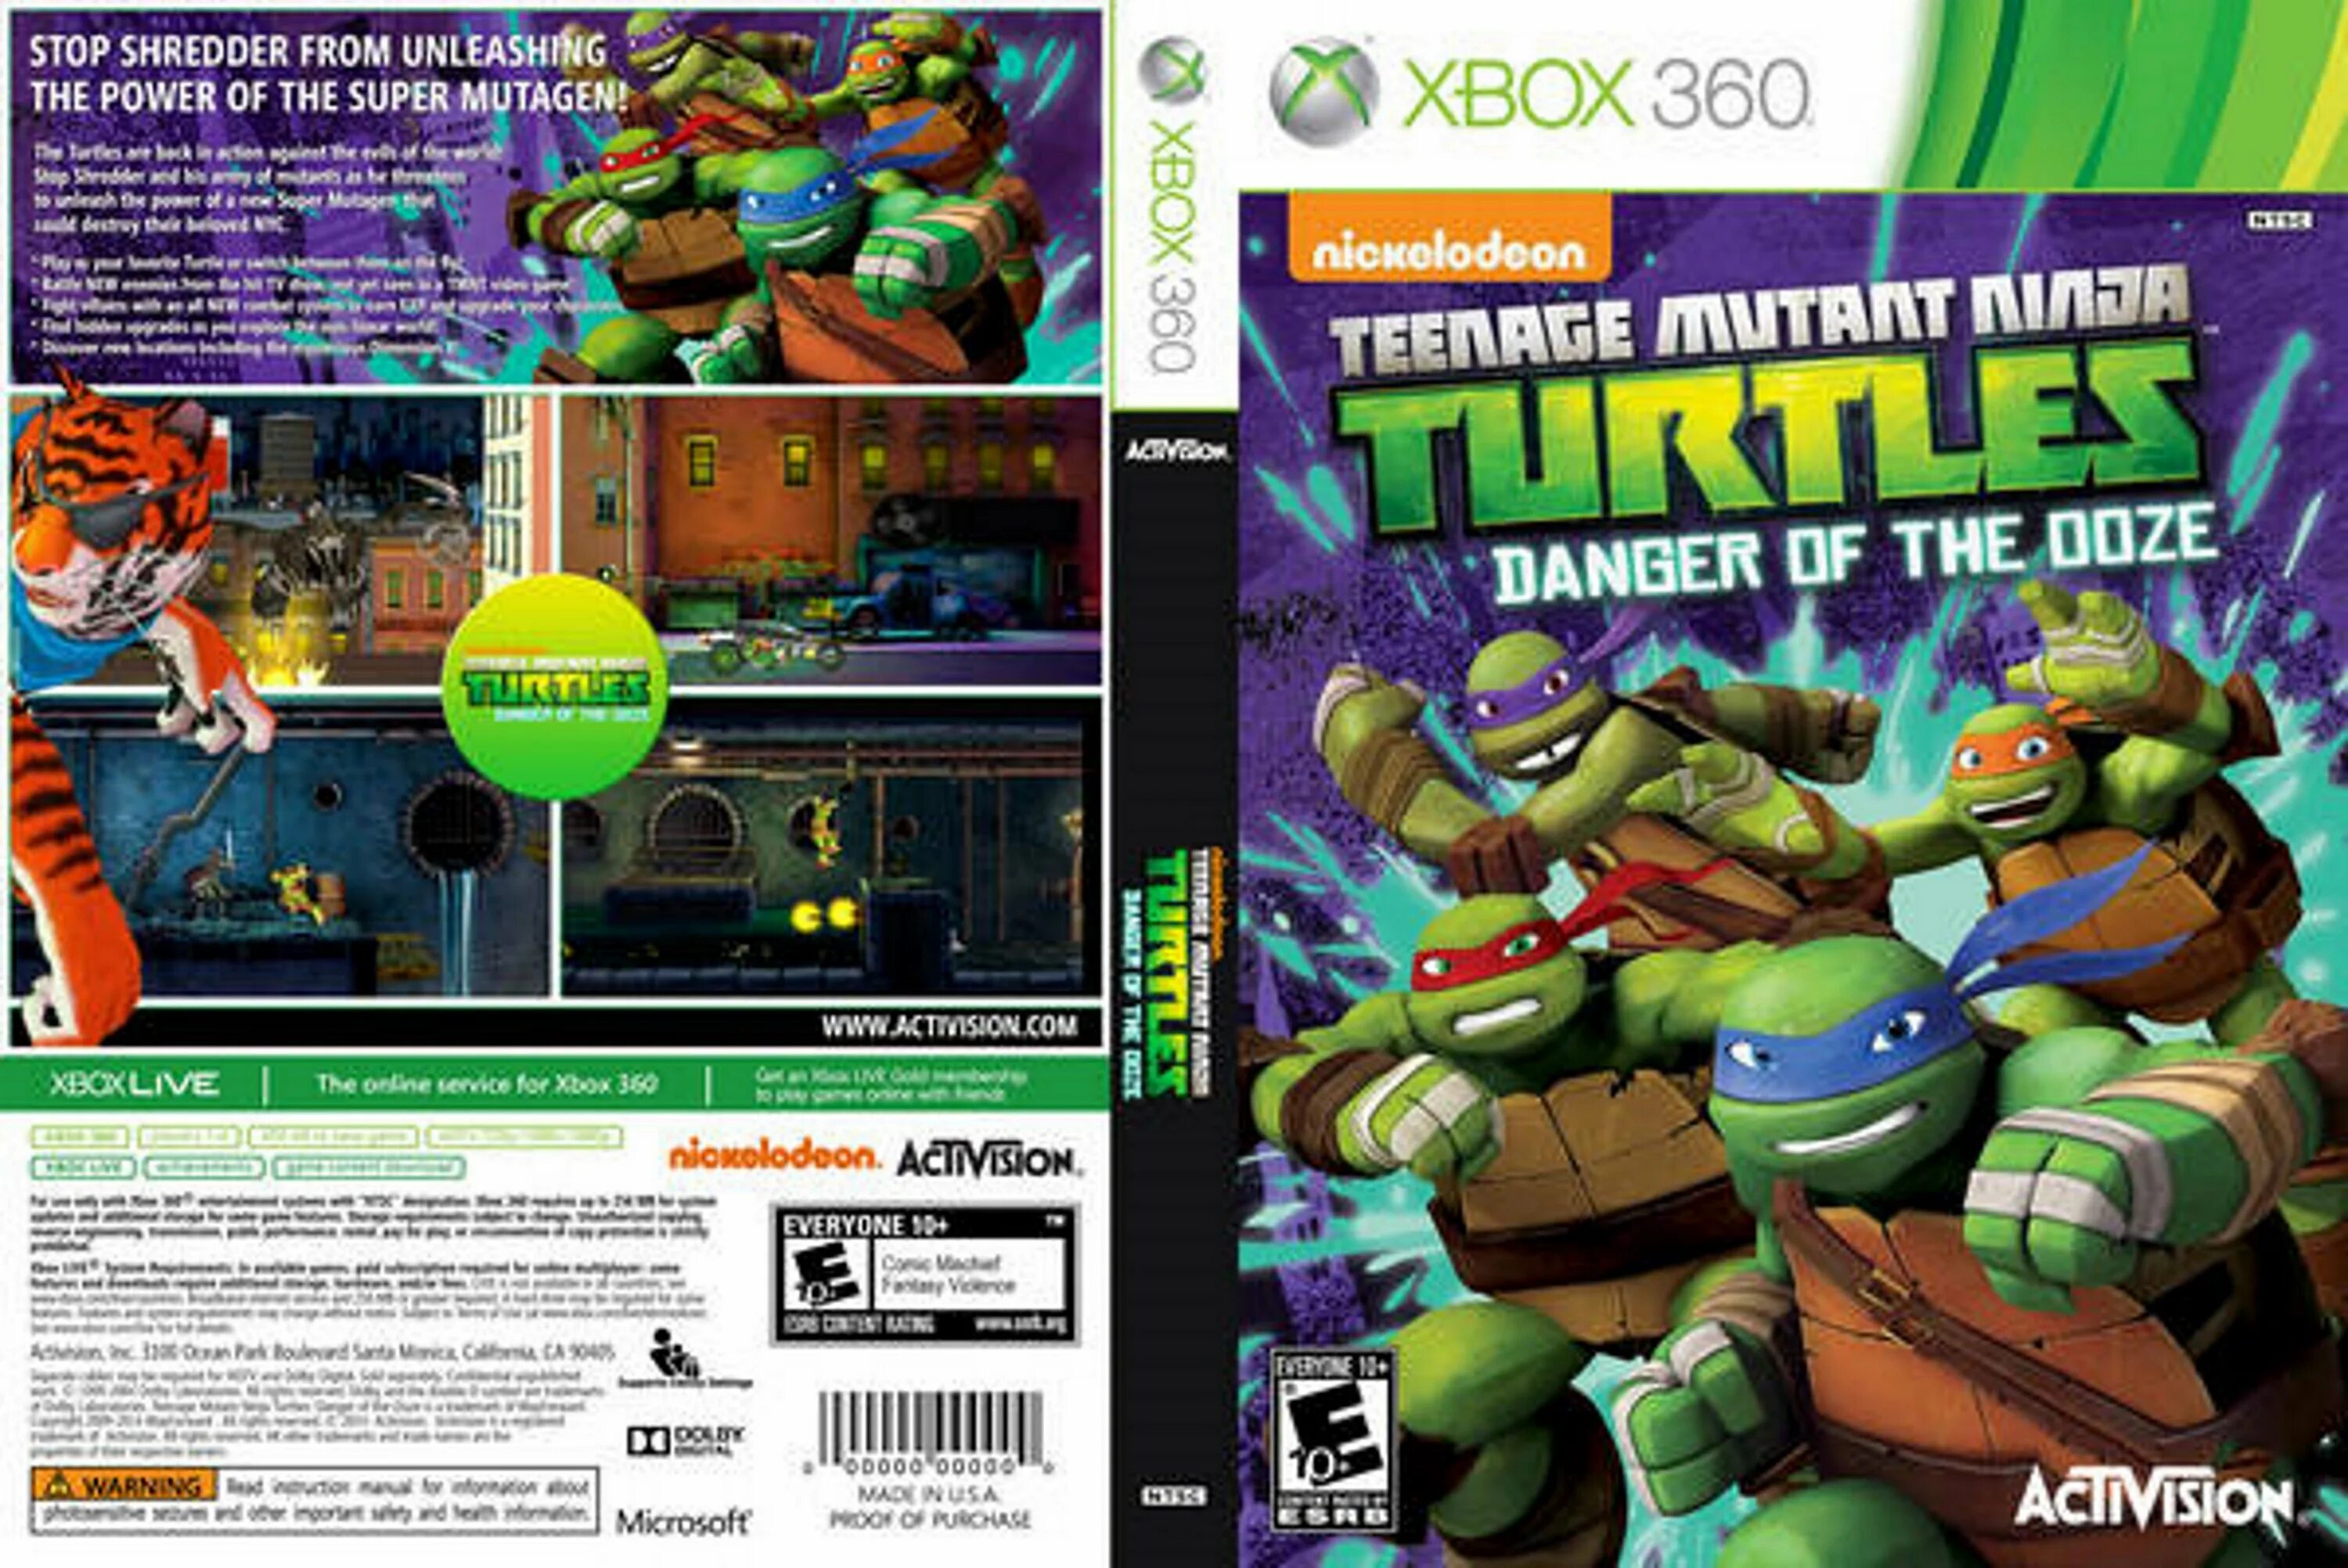 Tmnt xbox. Teenage Mutant Ninja Turtles Xbox 360. Черепашки ниндзя Икс бокс. Черепашки ниндзя на Икс бокс 360. Черепашки ниндзя на иксбокс 360.